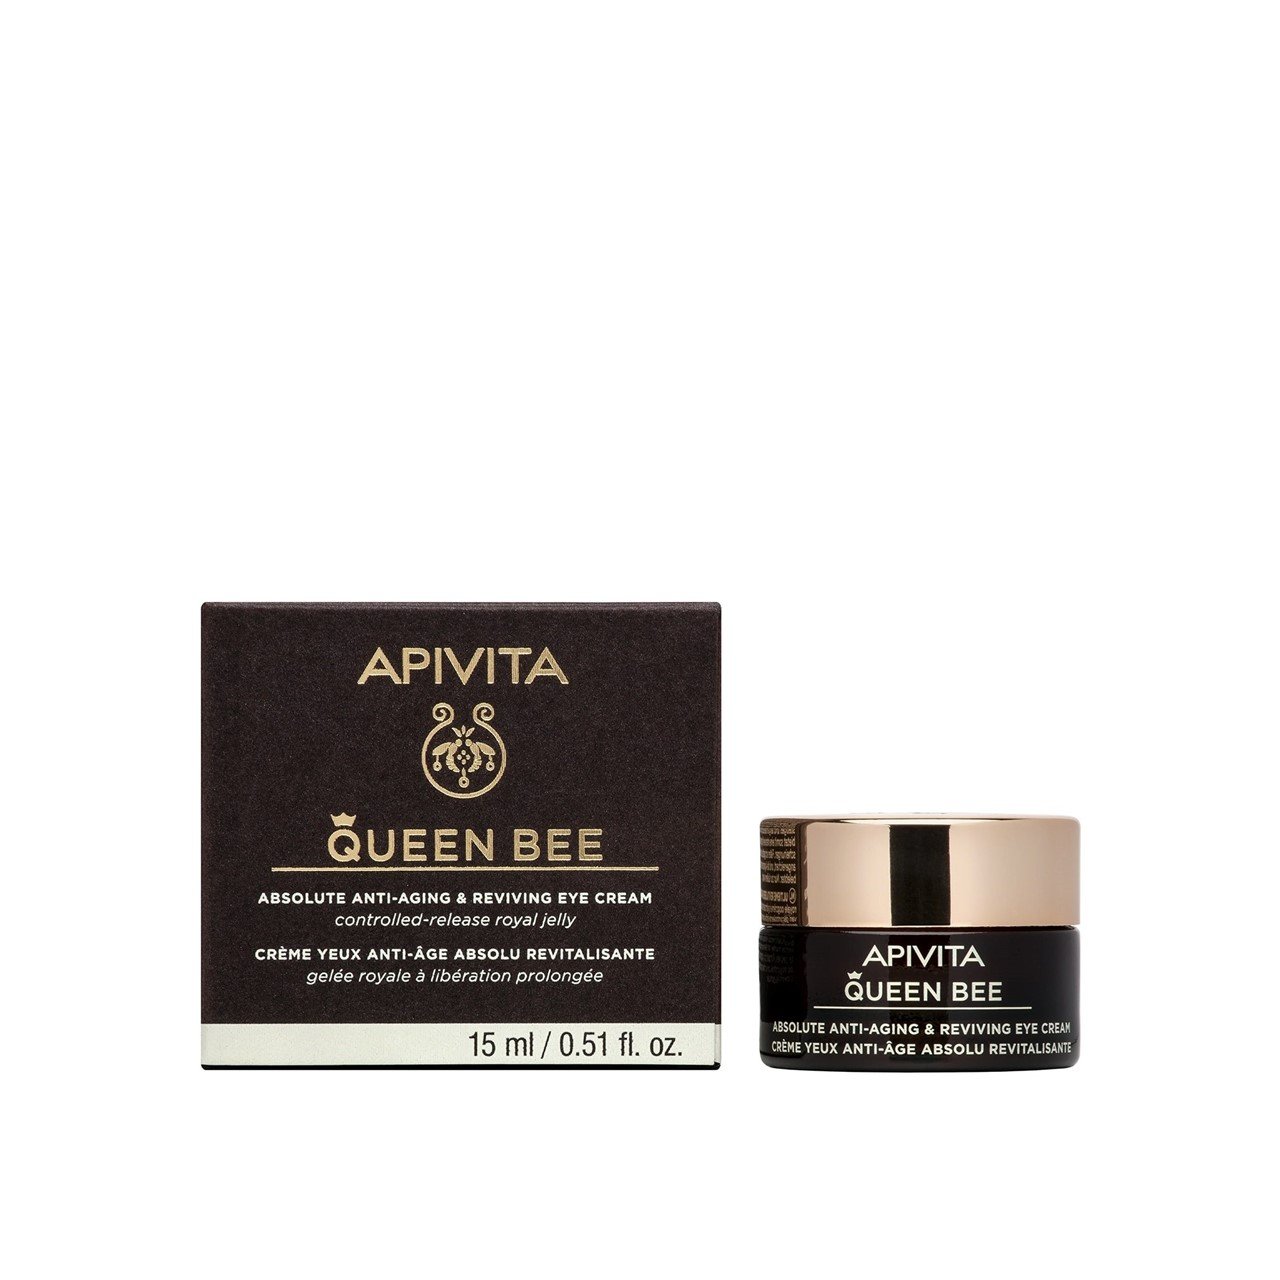 APIVITA Queen Bee Absolute Anti-Aging & Reviving Eye Cream 15ml (0.51fl oz)